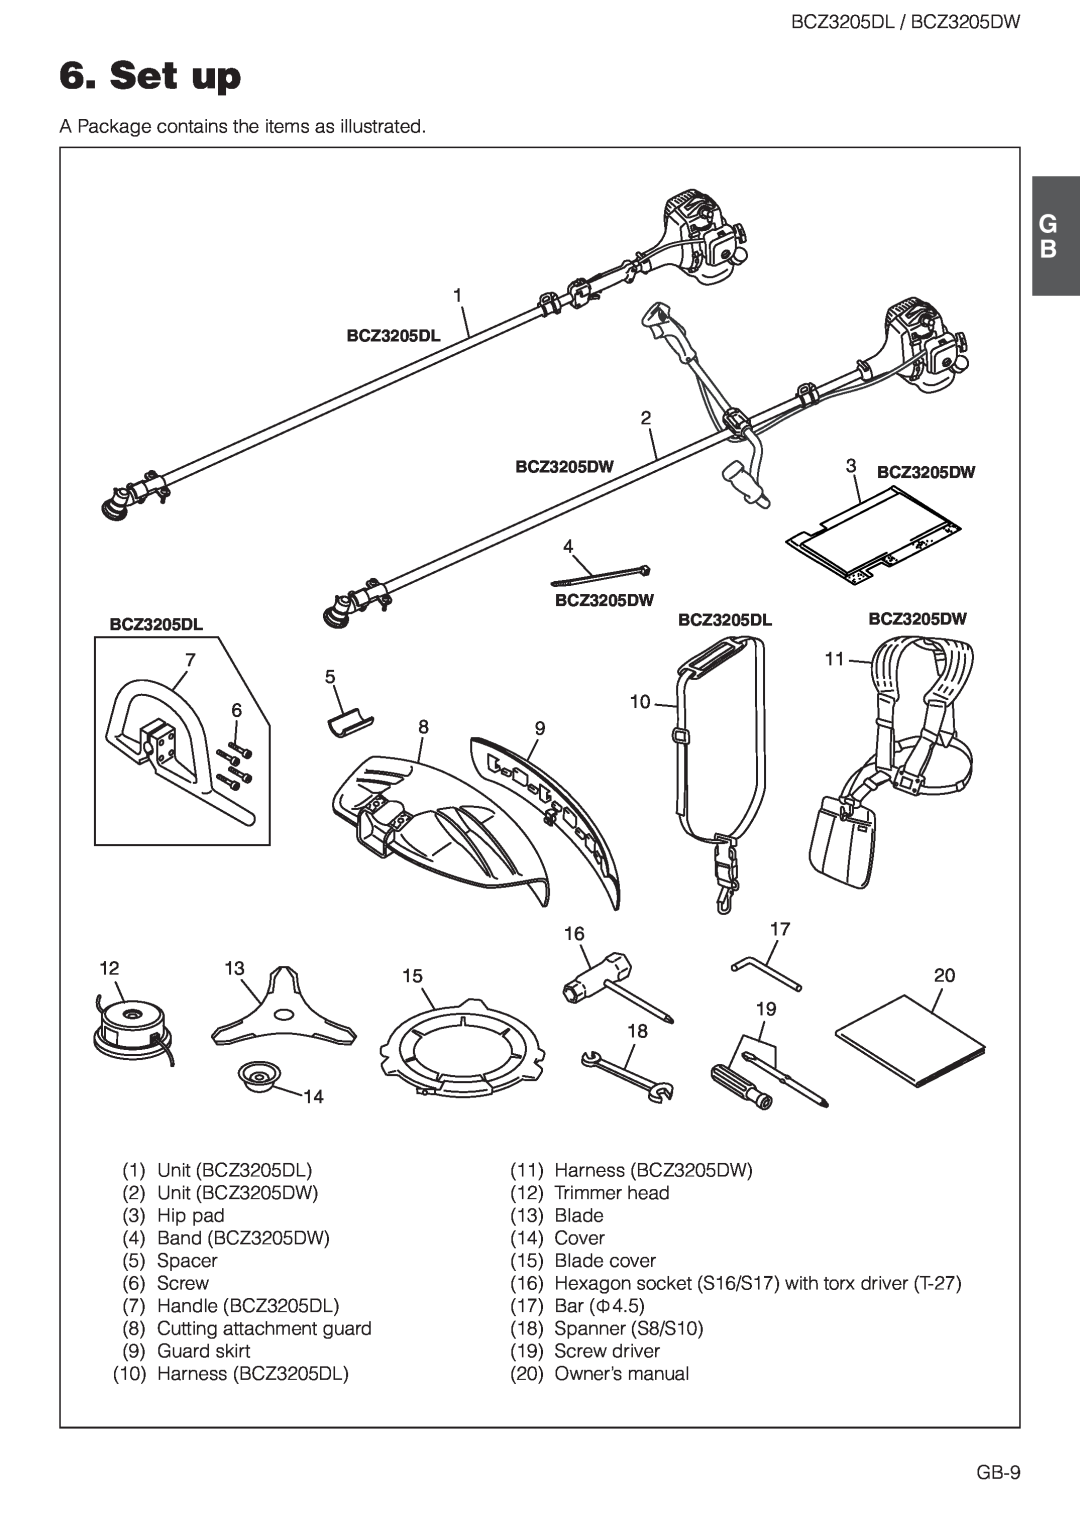 Husqvarna BCZ3205DL owner manual Set up, Harness BCZ3205DW 